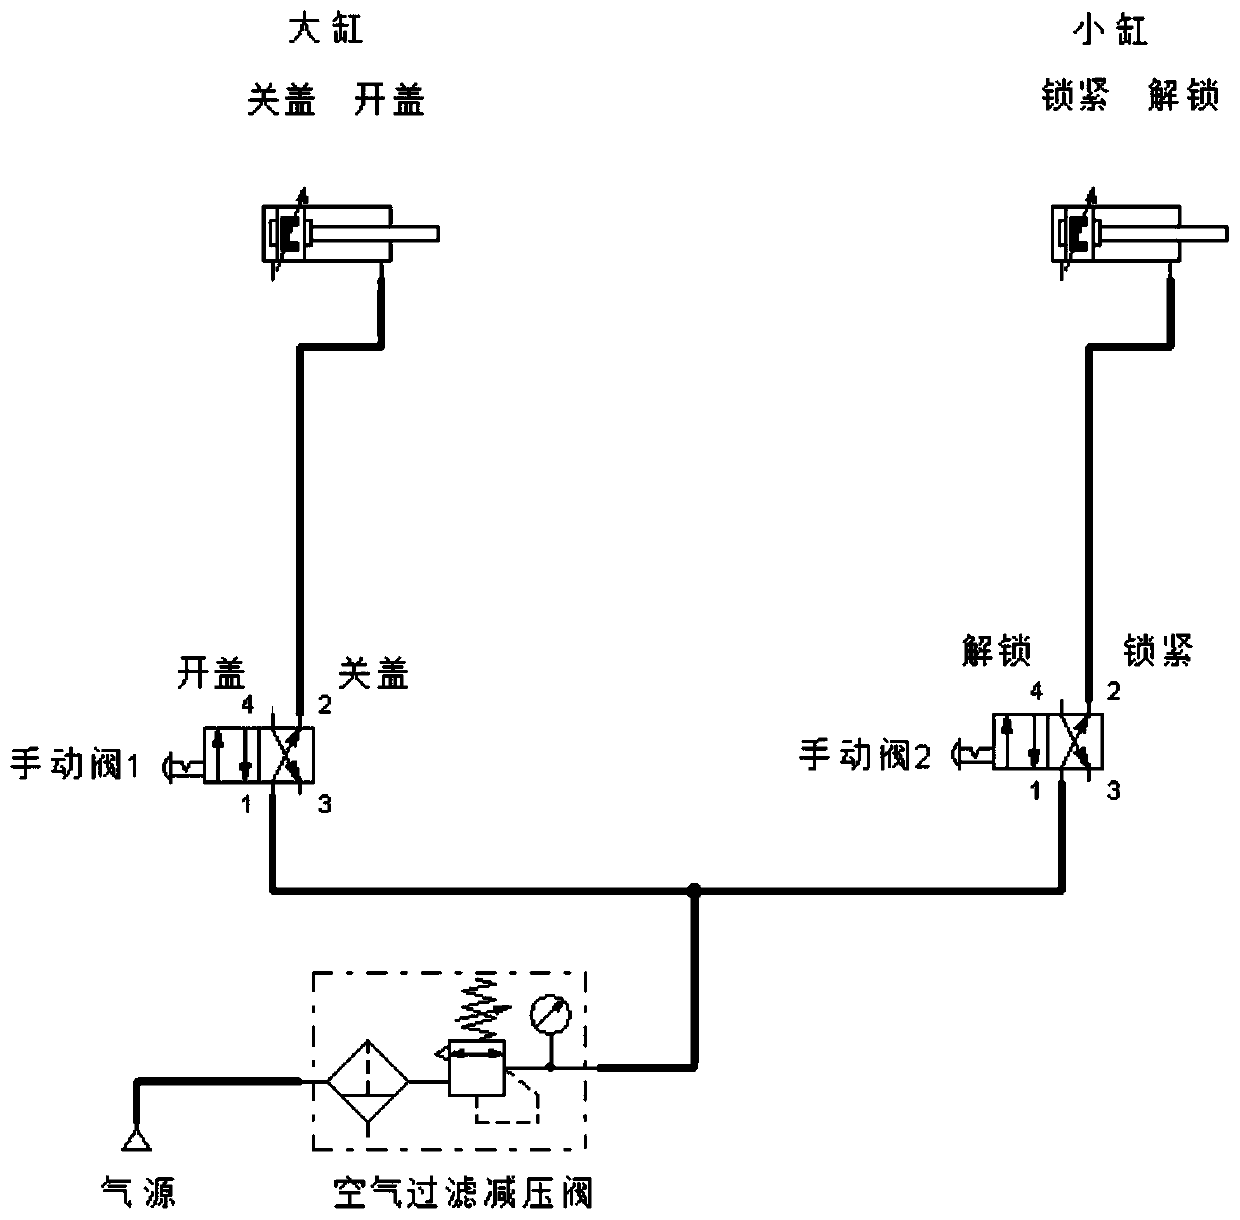 Interlock pneumatic control system of de-slagging gate